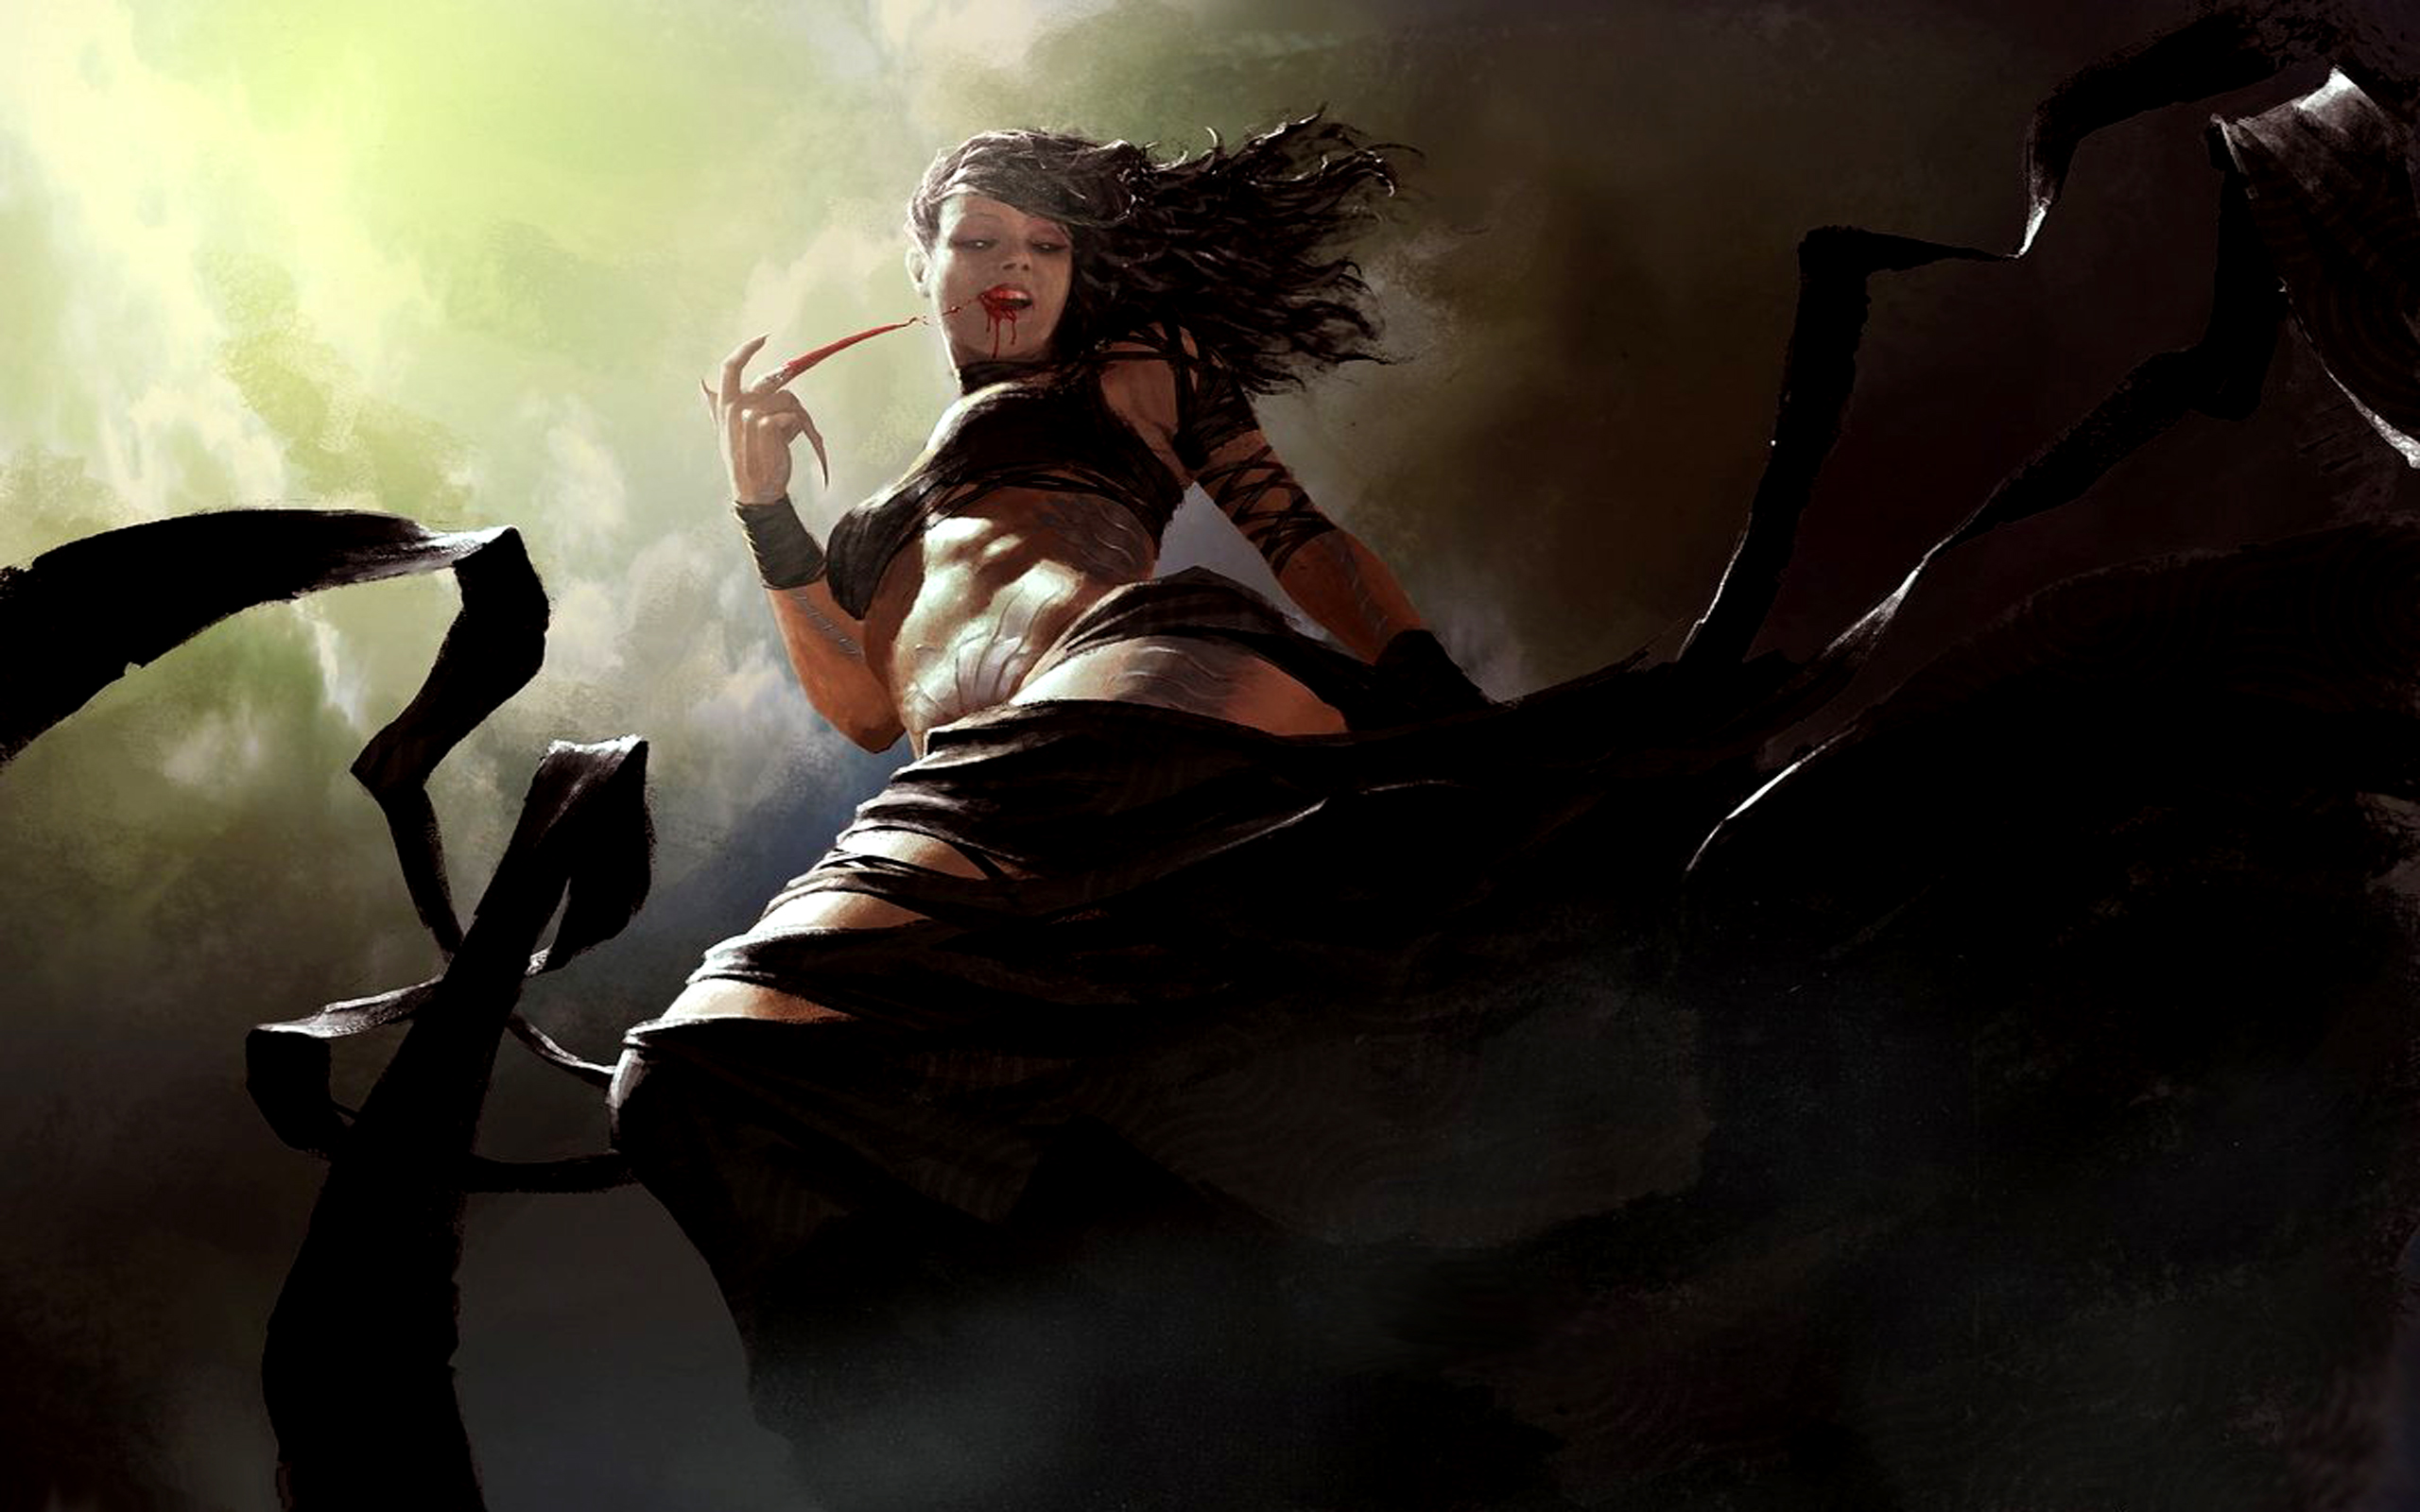 Dark vampire riding a wind in stunning desktop wallpaper by Igor Kieryluk.